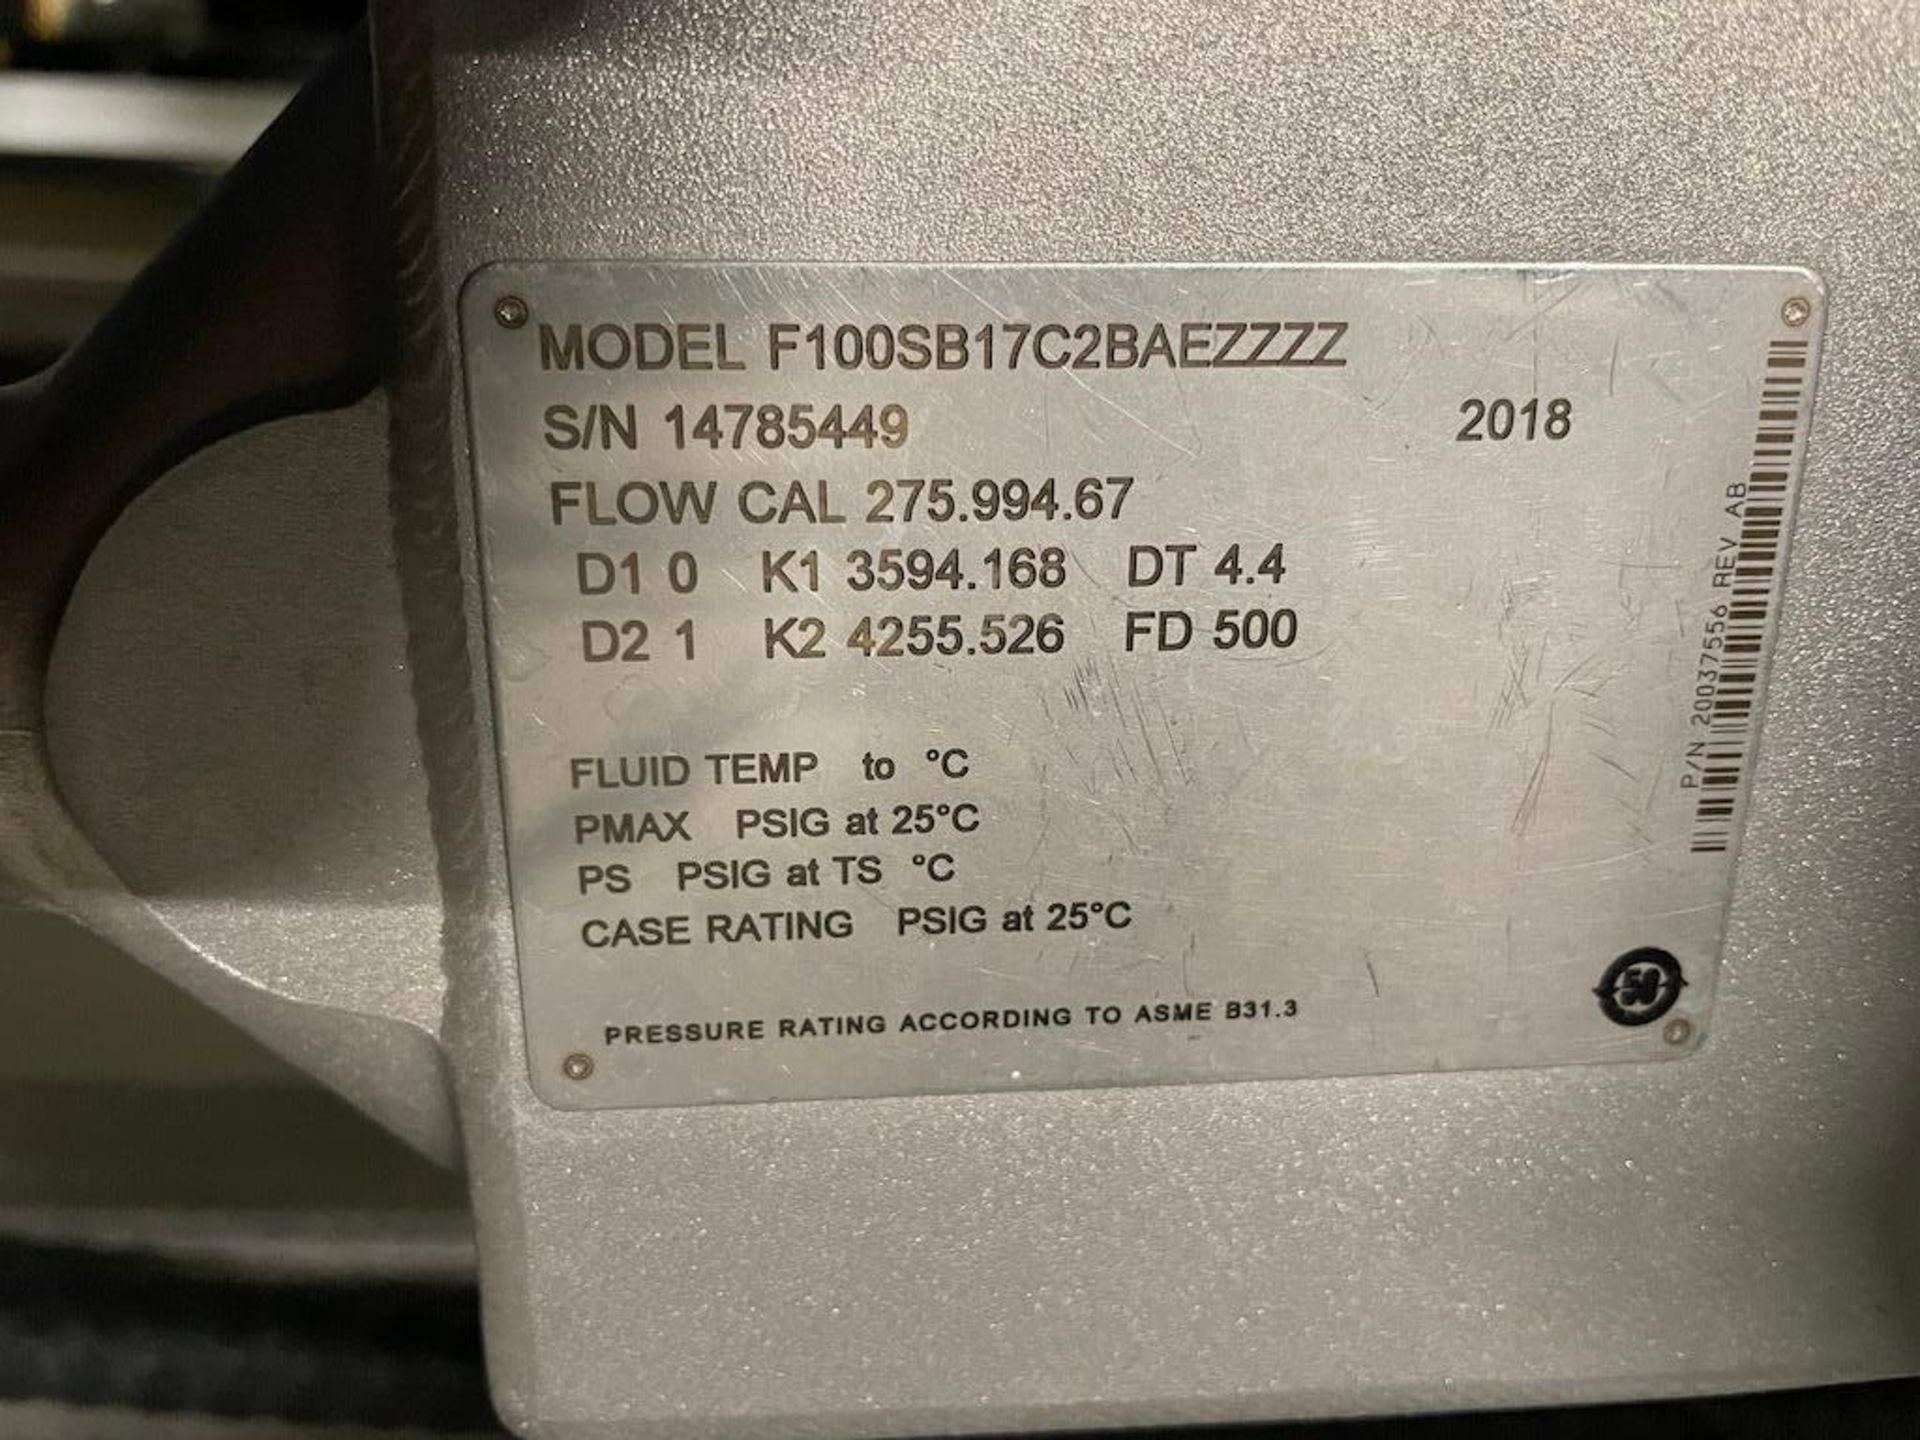 2018 MICRO MOTION MASS FLOW SENSORS: MODEL F100SB17C2BAEZZZZ, FLOW CAL 275.994.67, SN 14785449 IN EX - Image 3 of 4